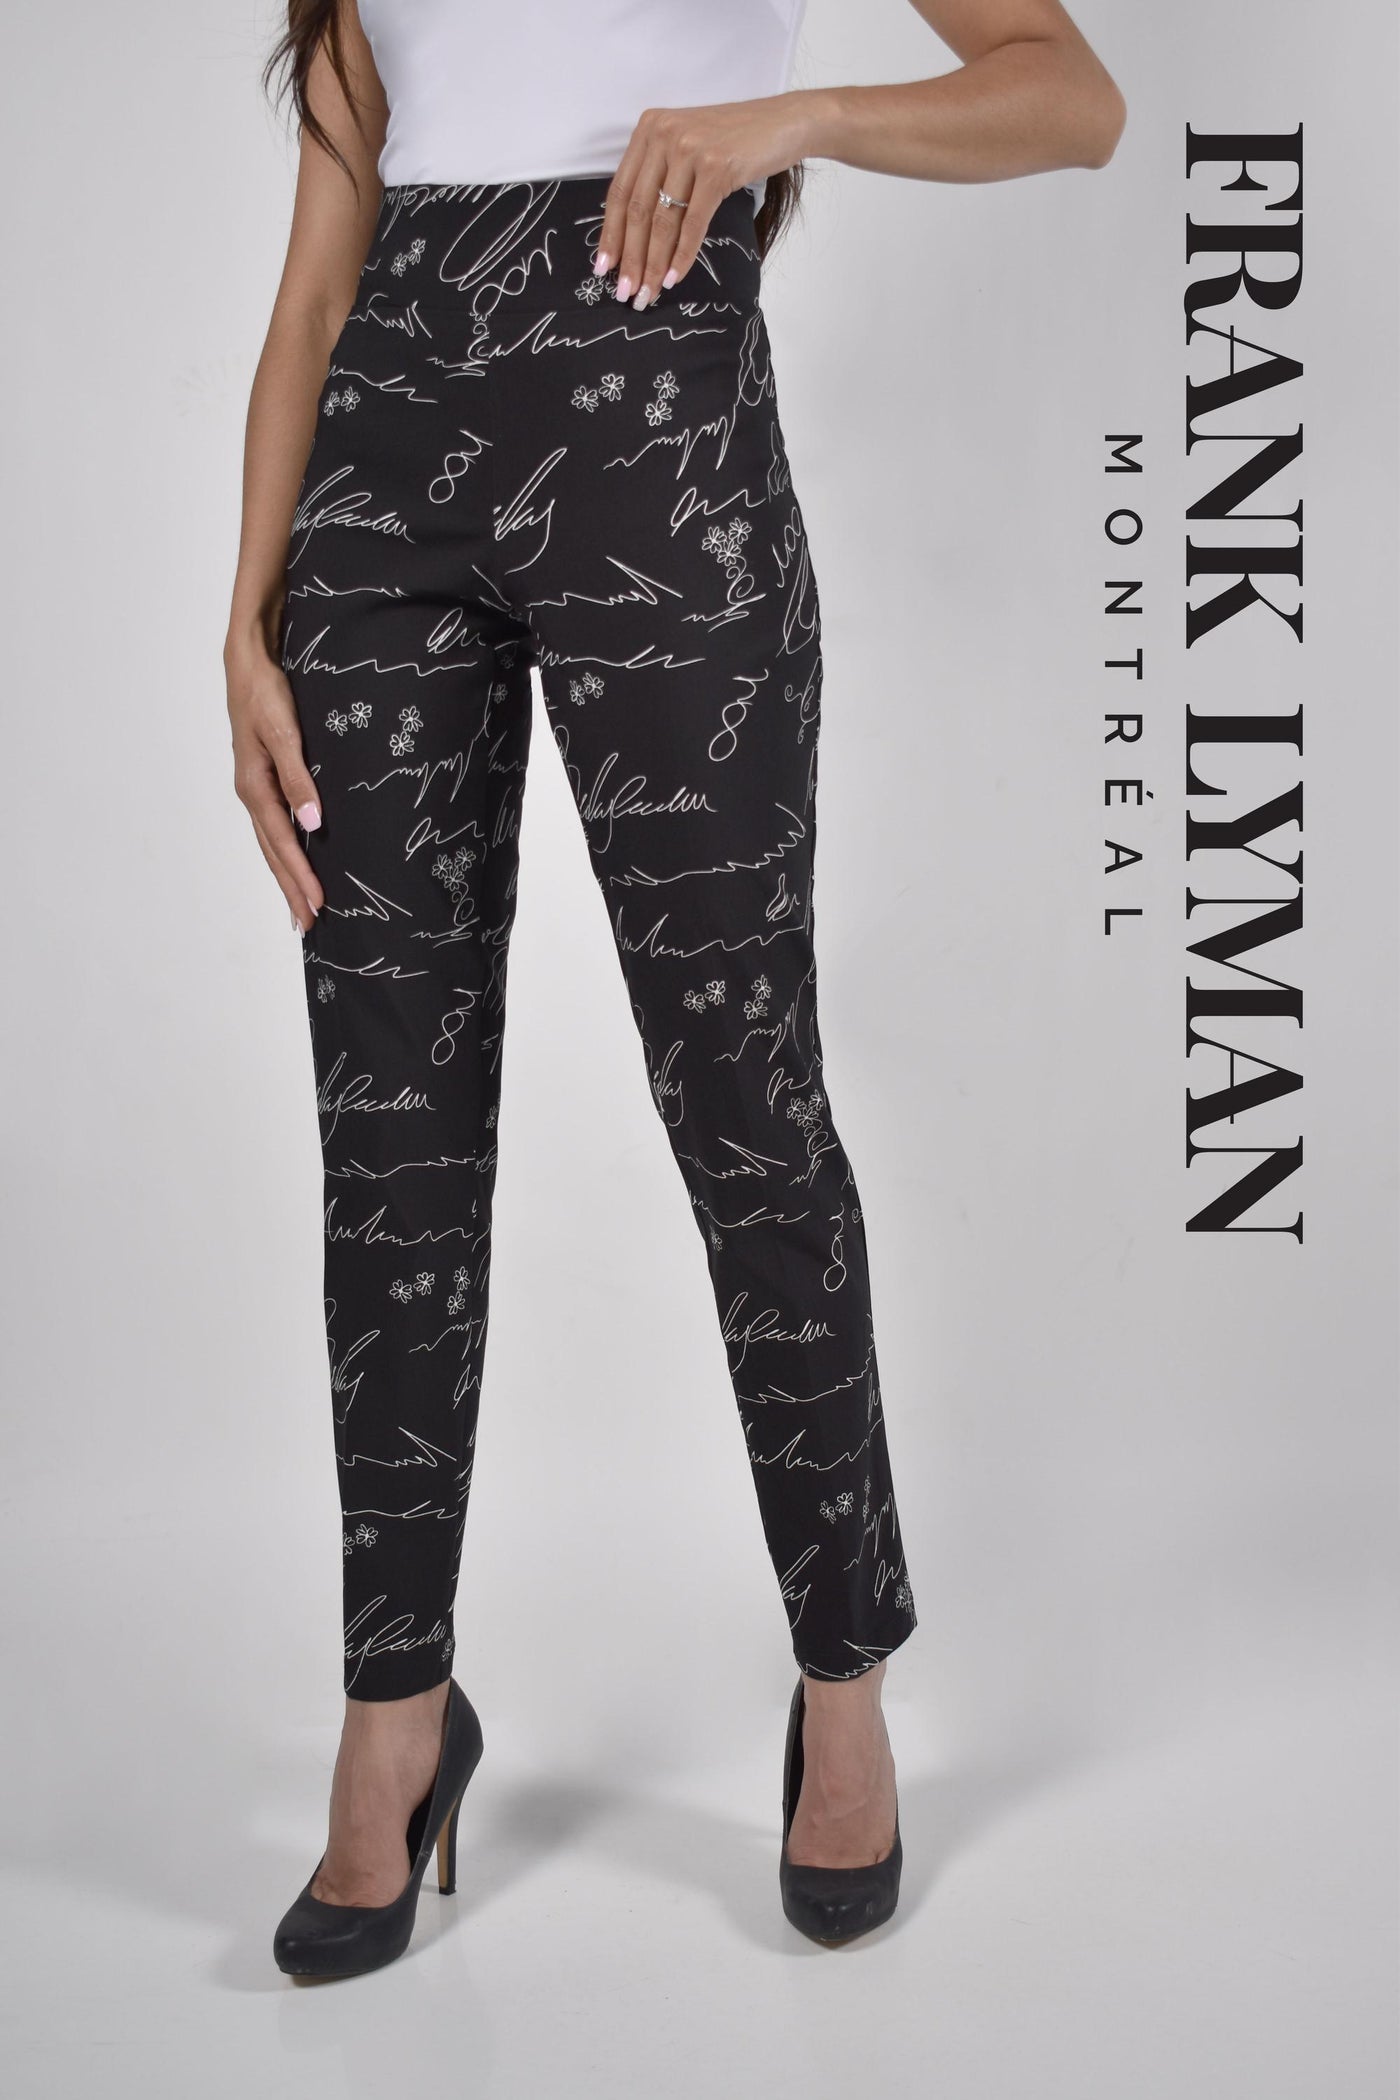 Frank Lyman Caligraphy Pants Style 226302, Color Black-White 